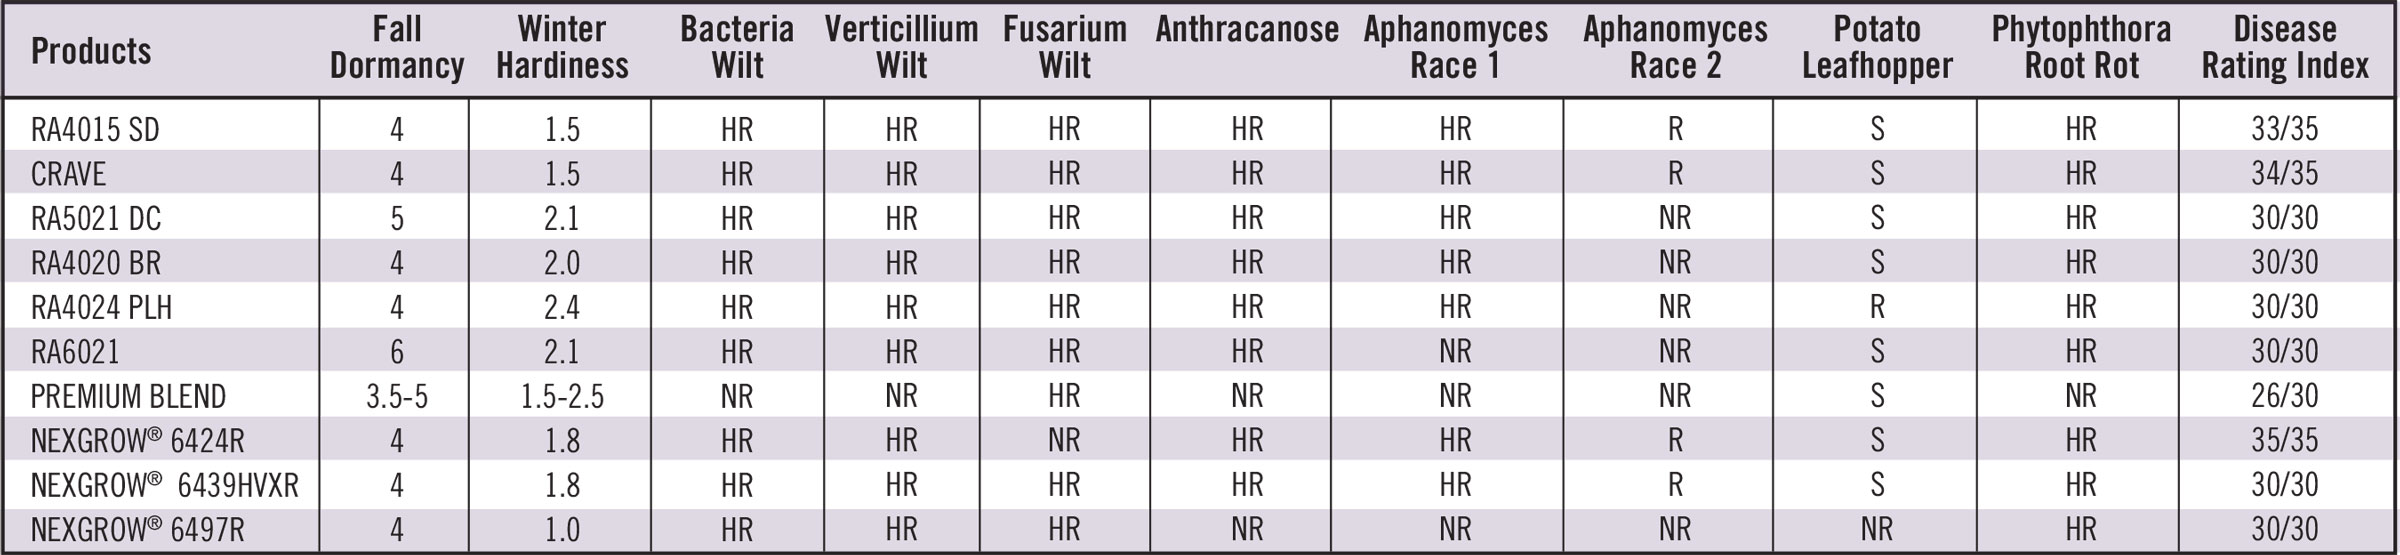 Alfalfa Agronomic Characteristics